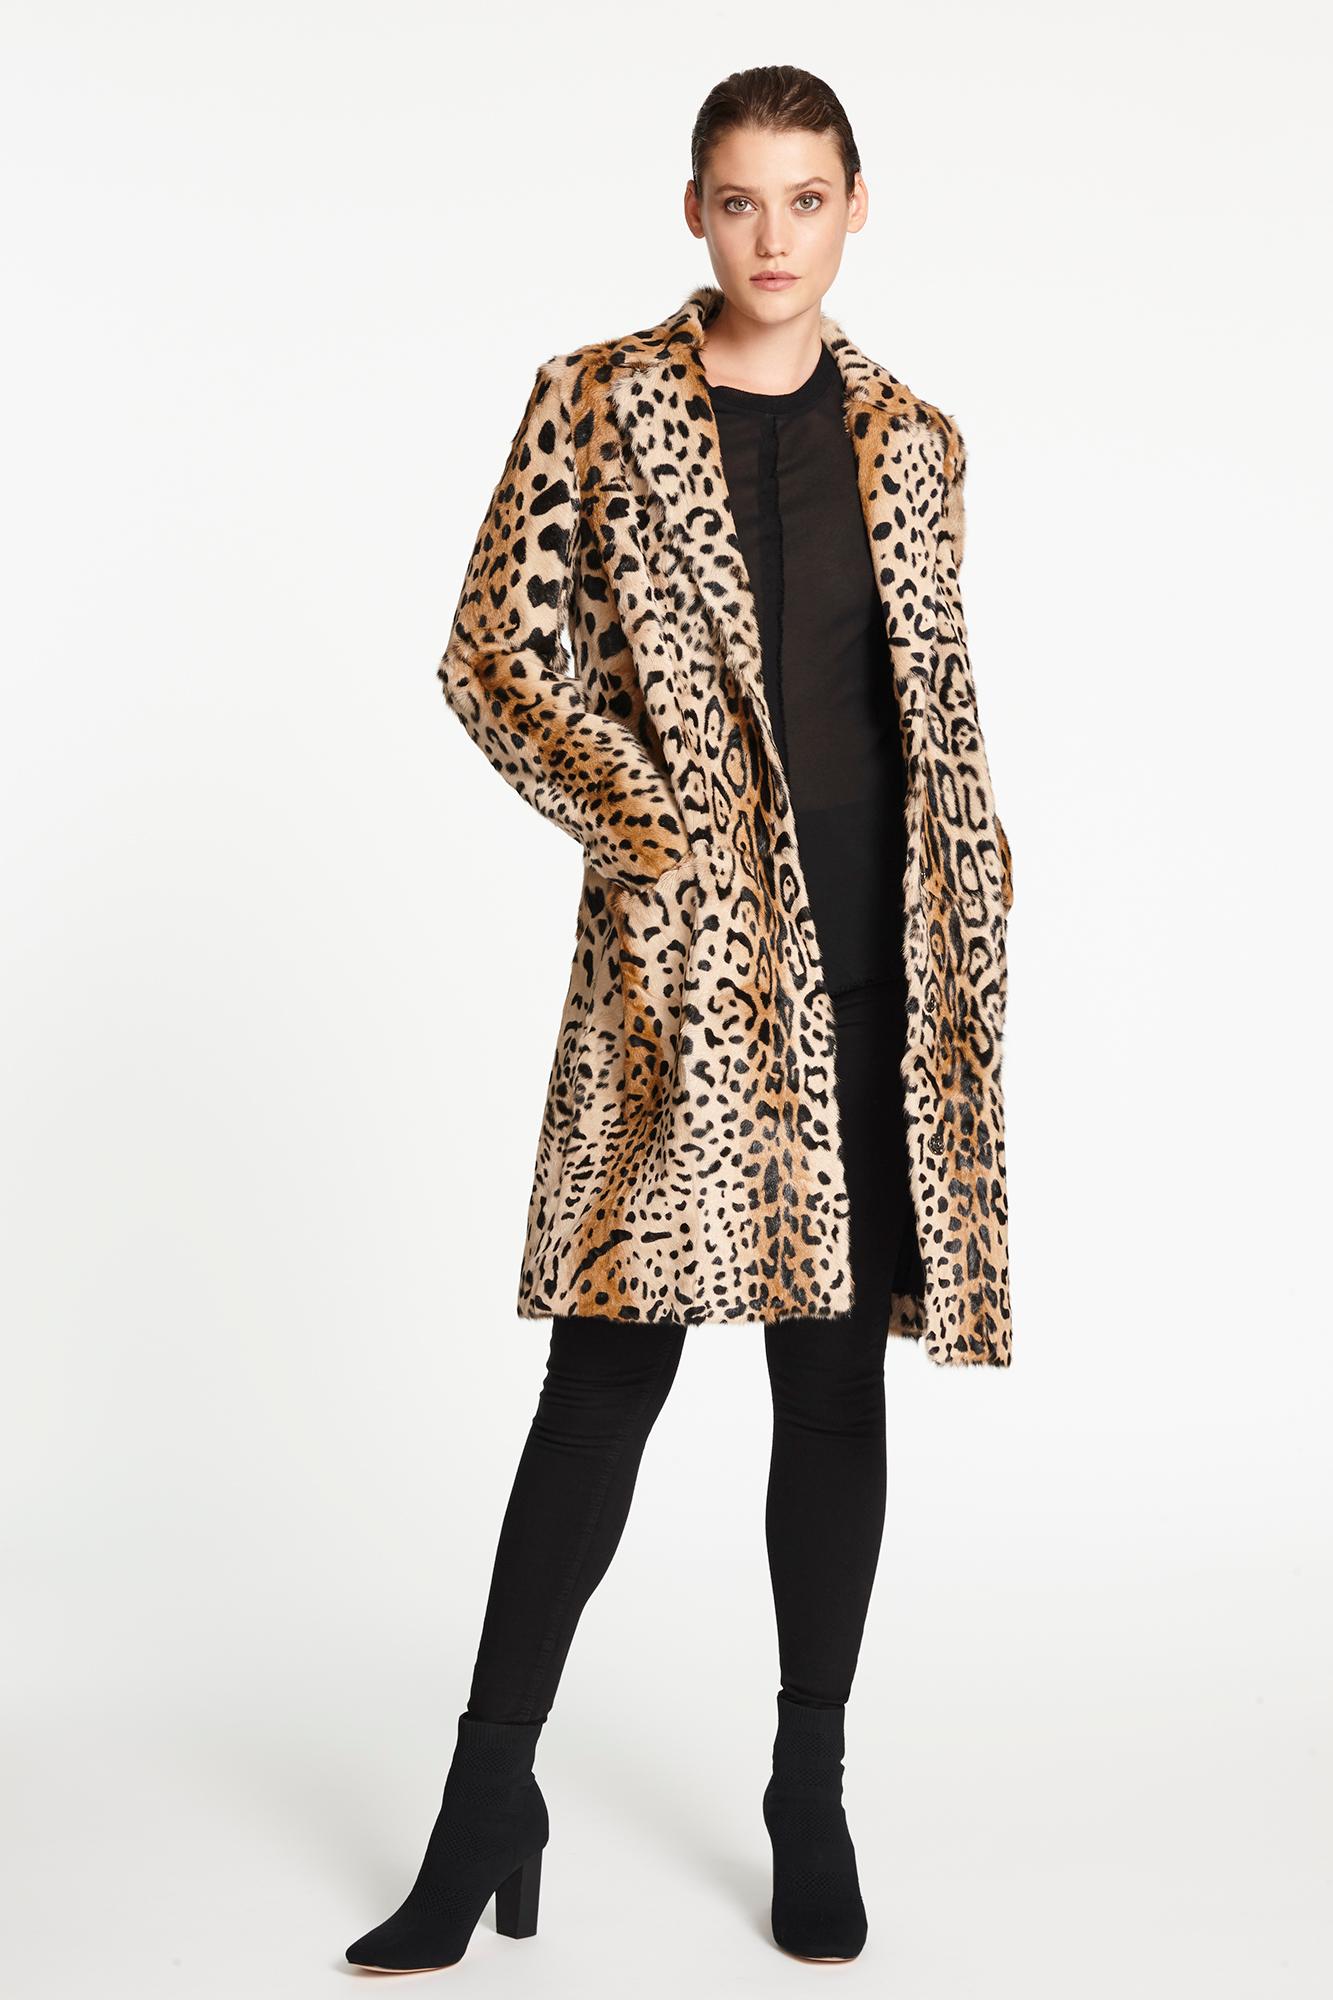 Verheyen London Leopard Print Coat in Red Ruby Goat Hair Fur UK 10 - Brand New  2